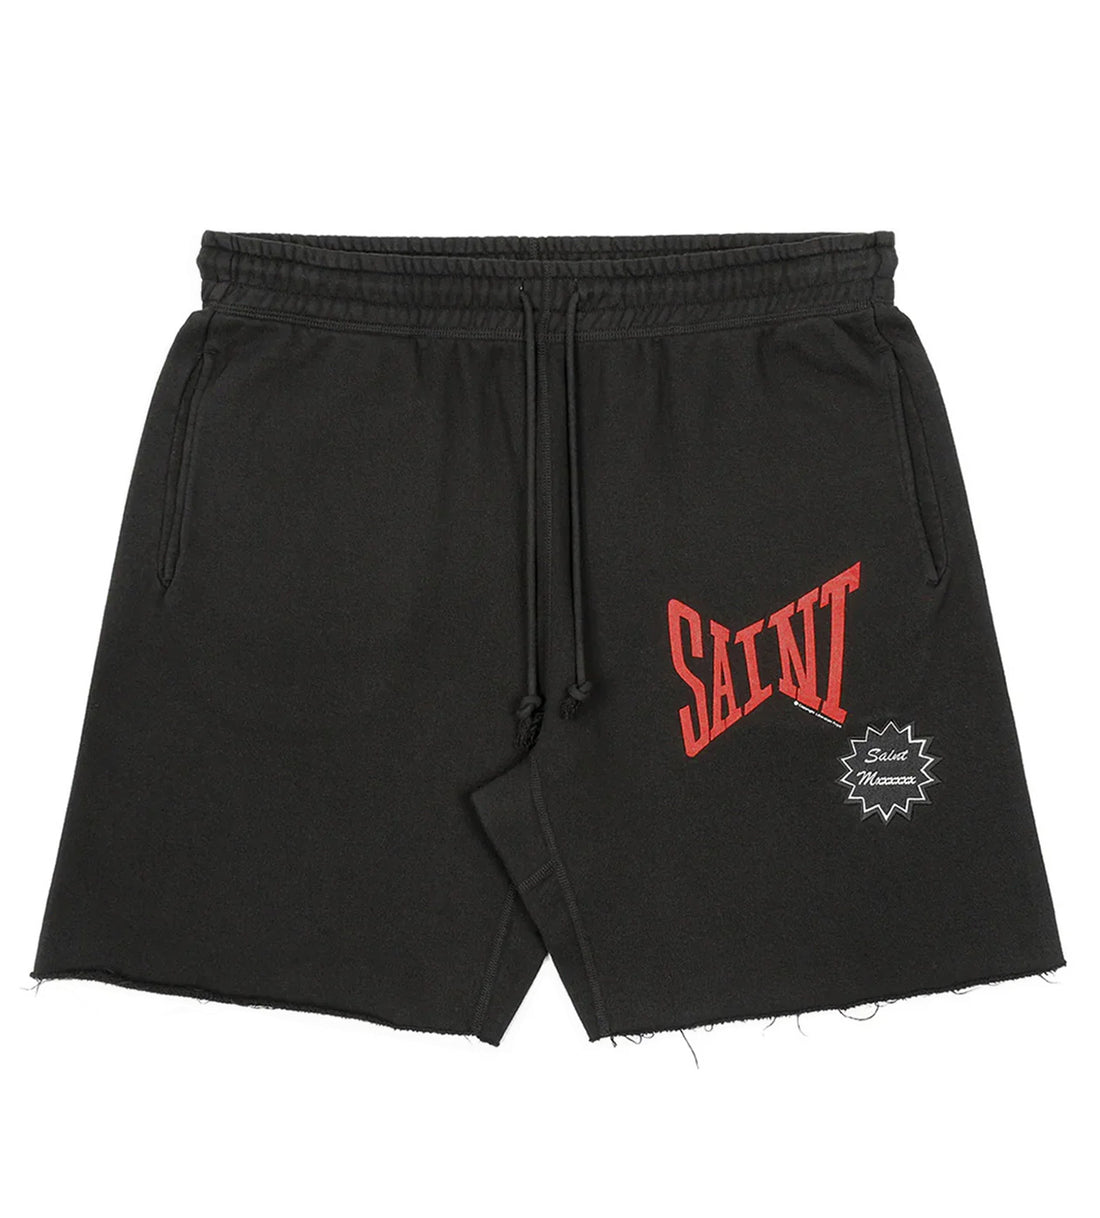 Saint Michael Logo Sweat Shorts Black front view